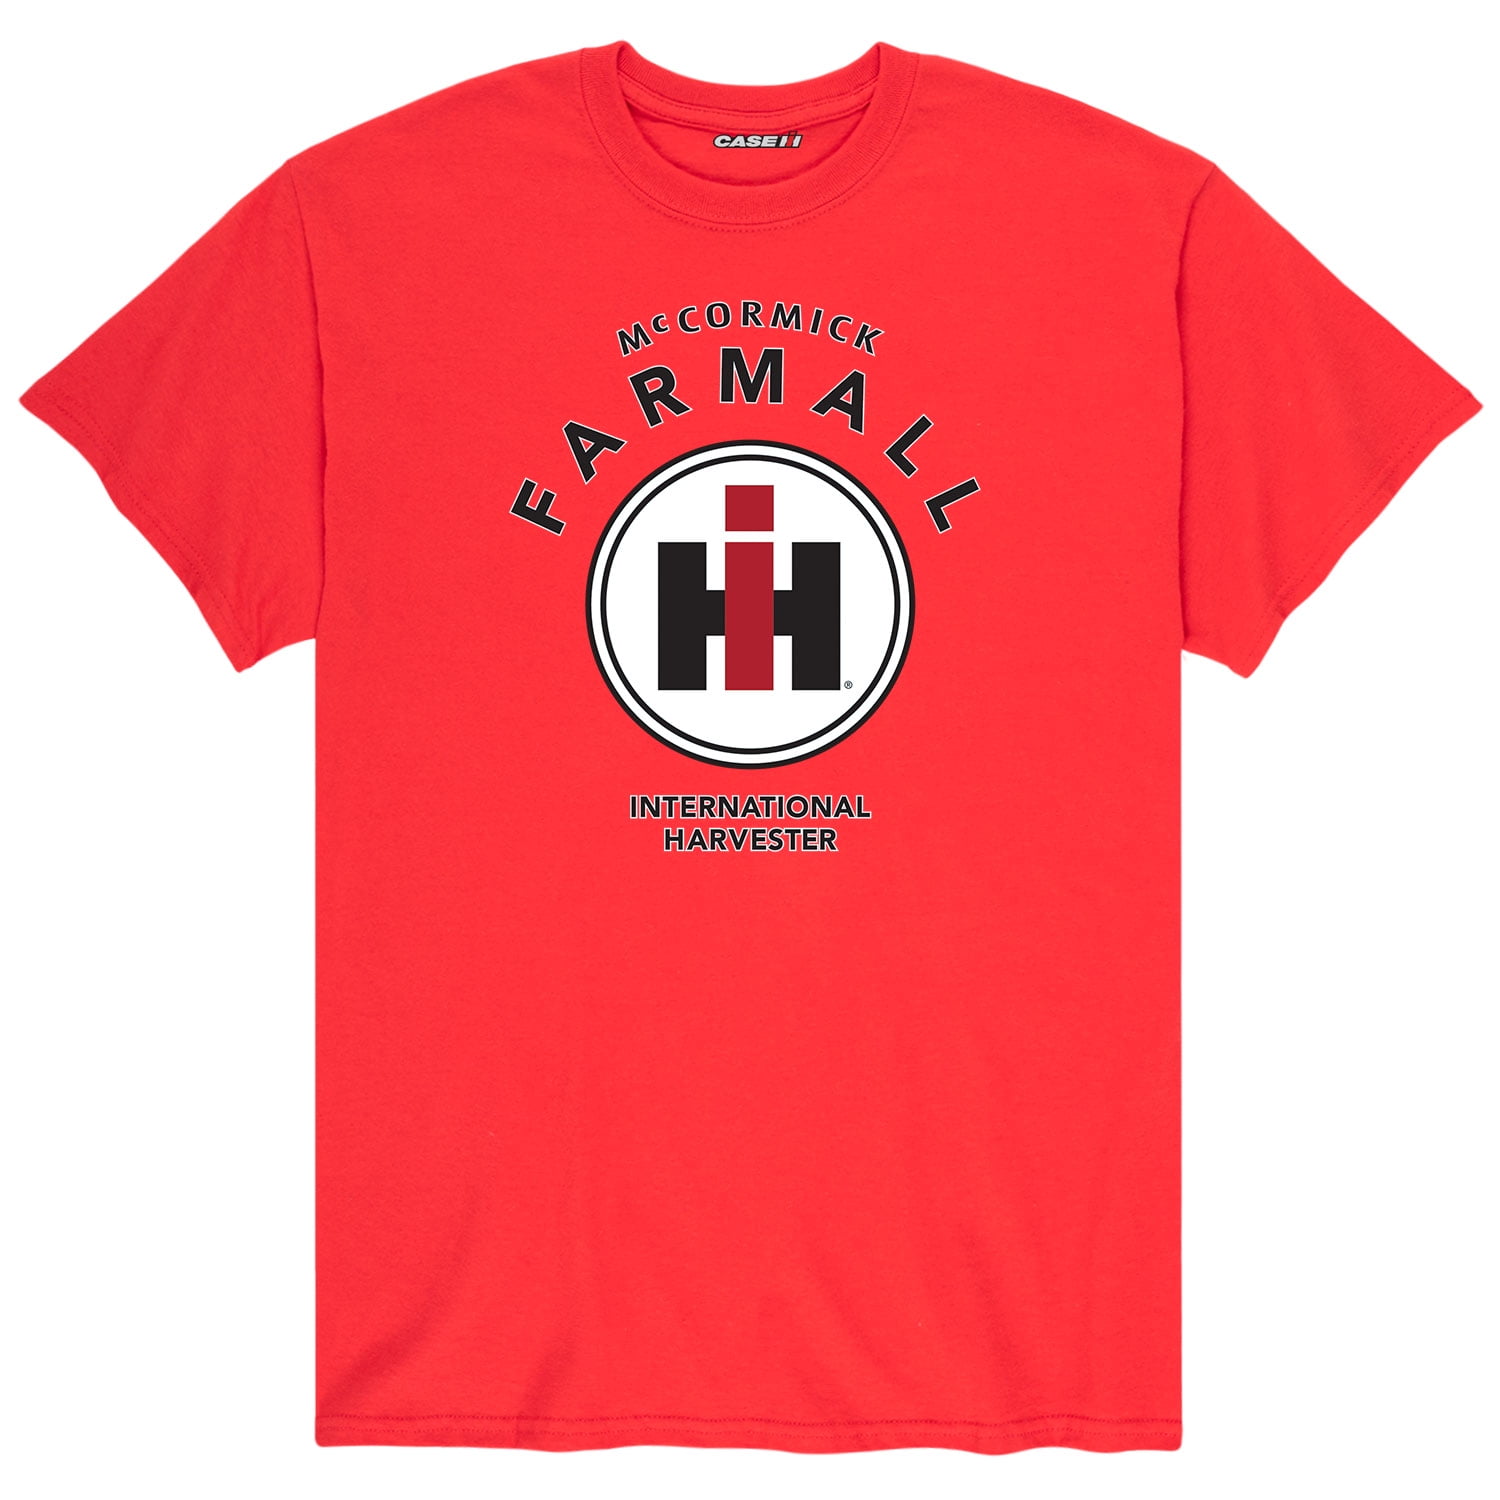 Case IH Mccormick Farmall Circle IH Logo Adult Men s Short Sleeve Graphic T Shirt 916ed0d8 0201 4101 9f0b ce34286a70e6.0f21f3f6a032cbf9d3b93110696683cb